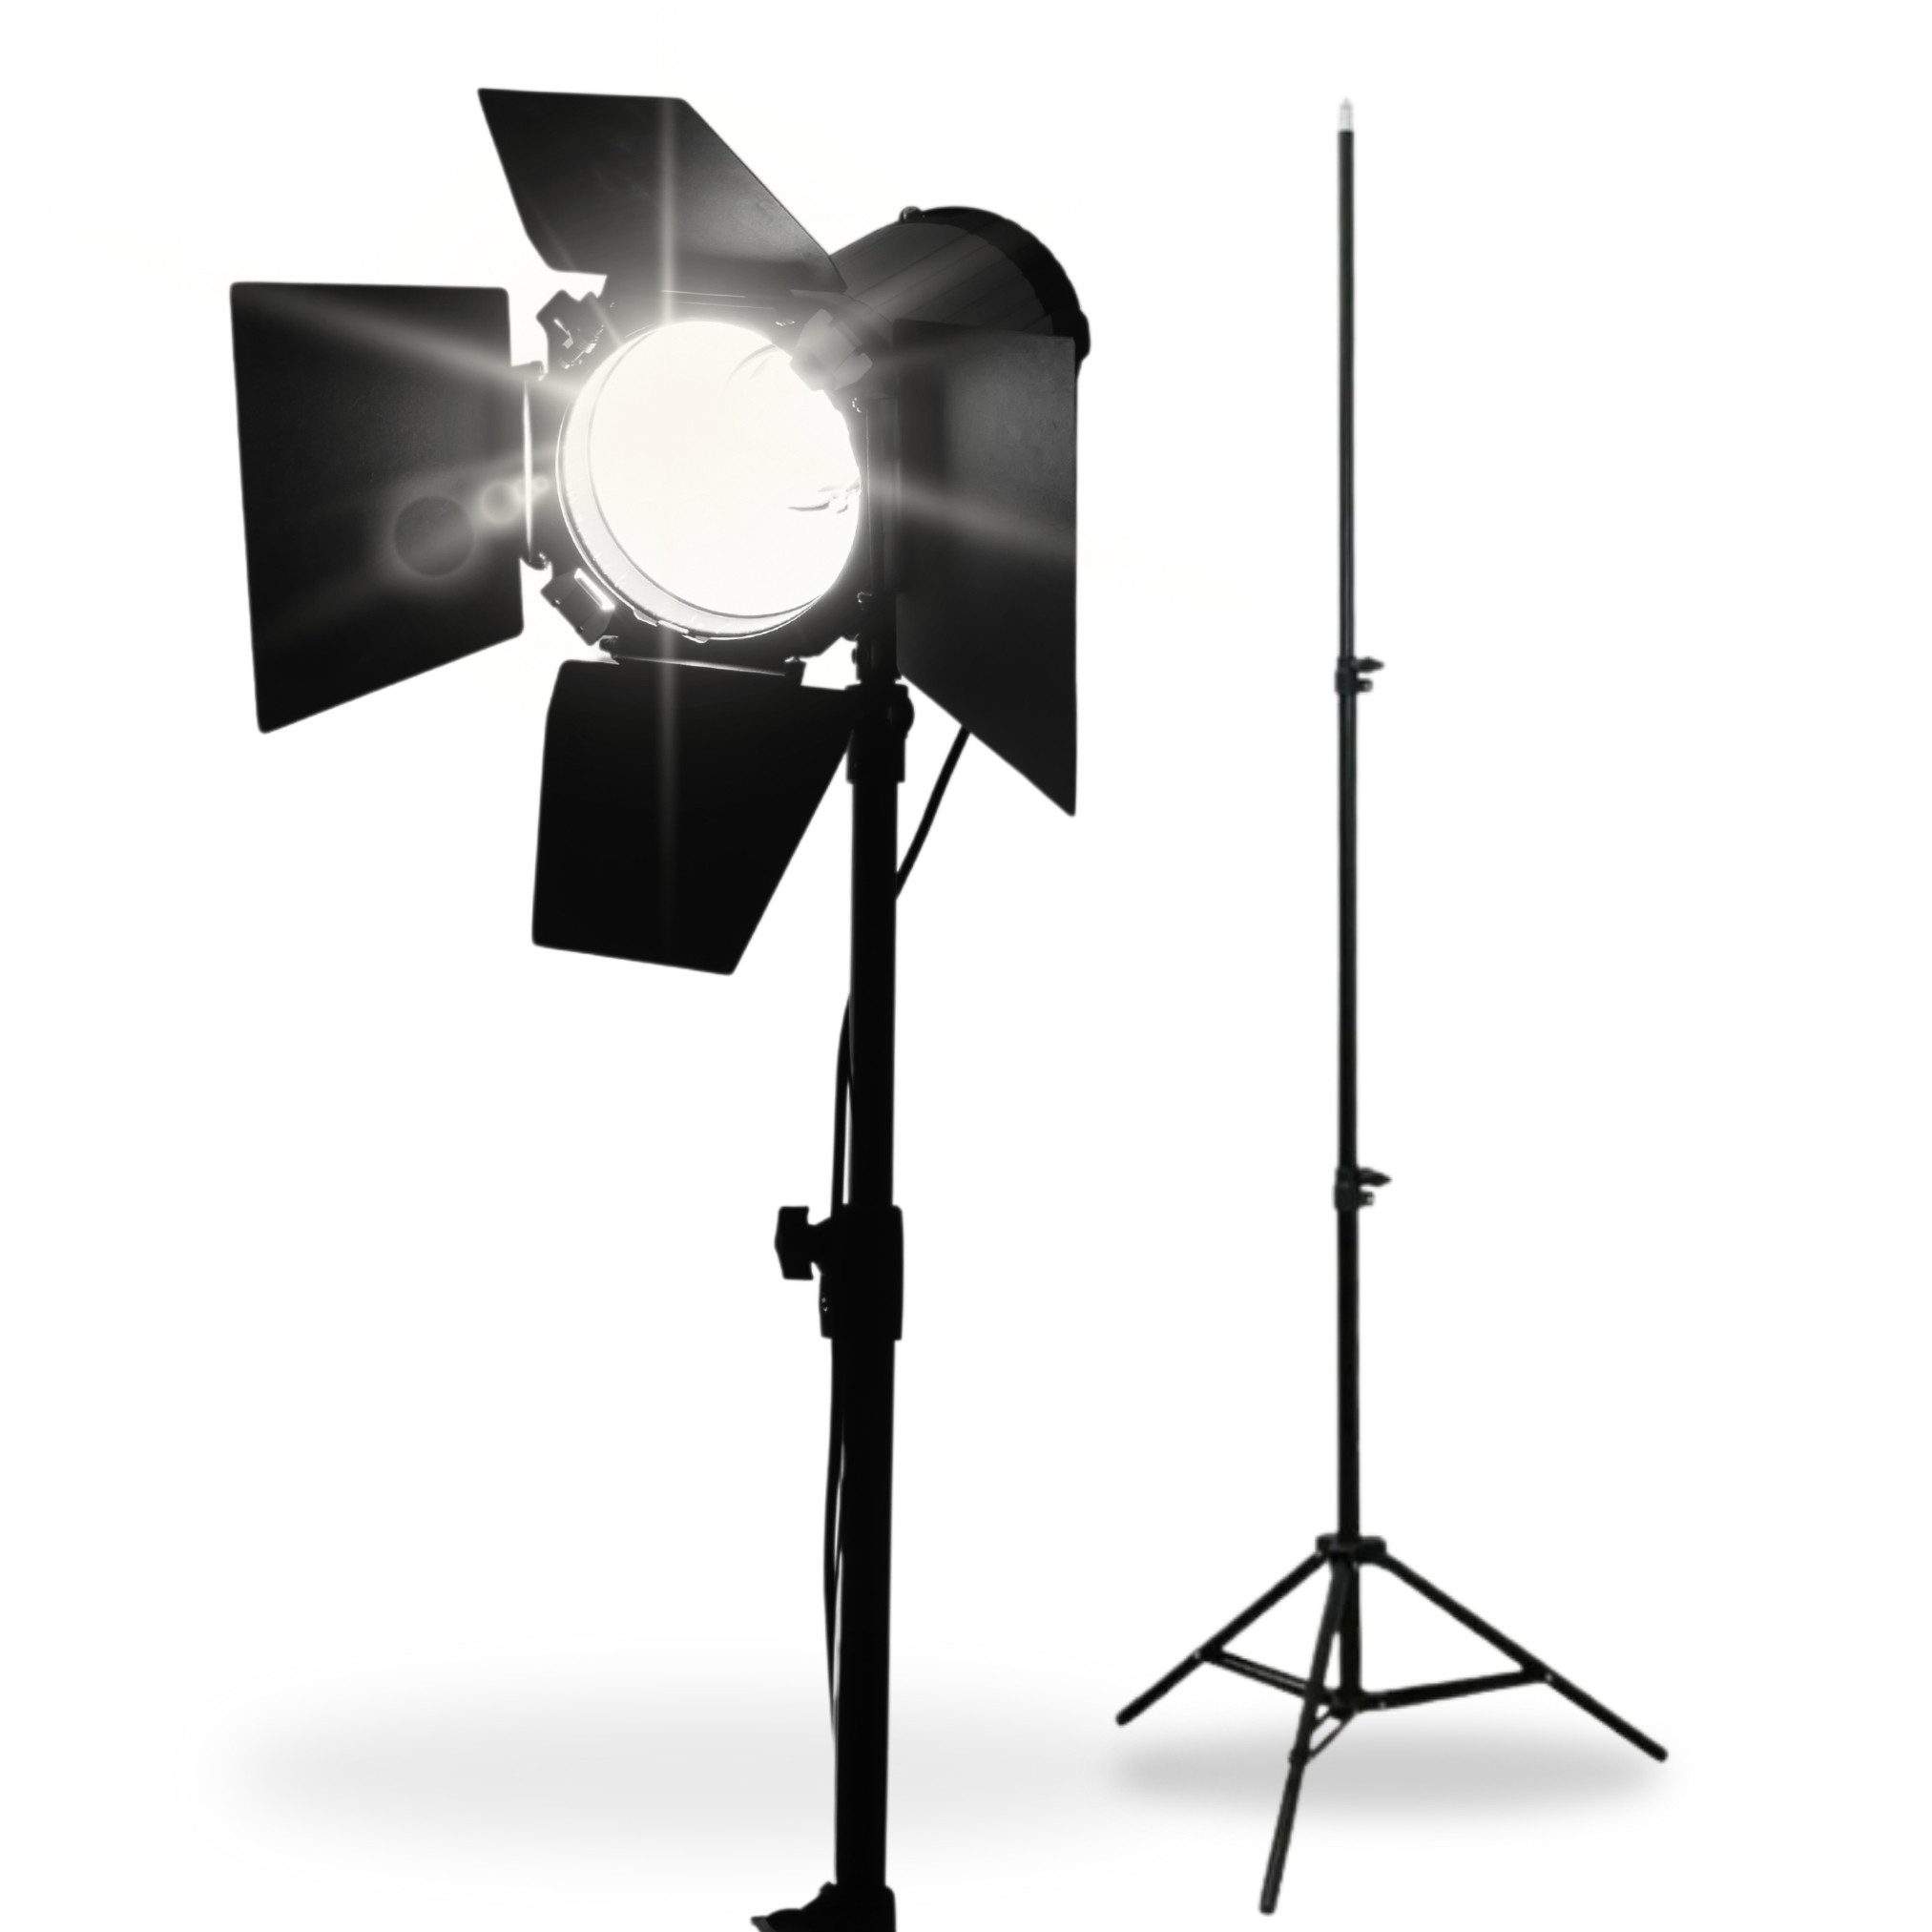 TronicXL 210cm Lampenstativ Stativ Lichtstativ Ständer 2m Blitz LED Leuchte Lampenstativ (Höhe: 210cm)